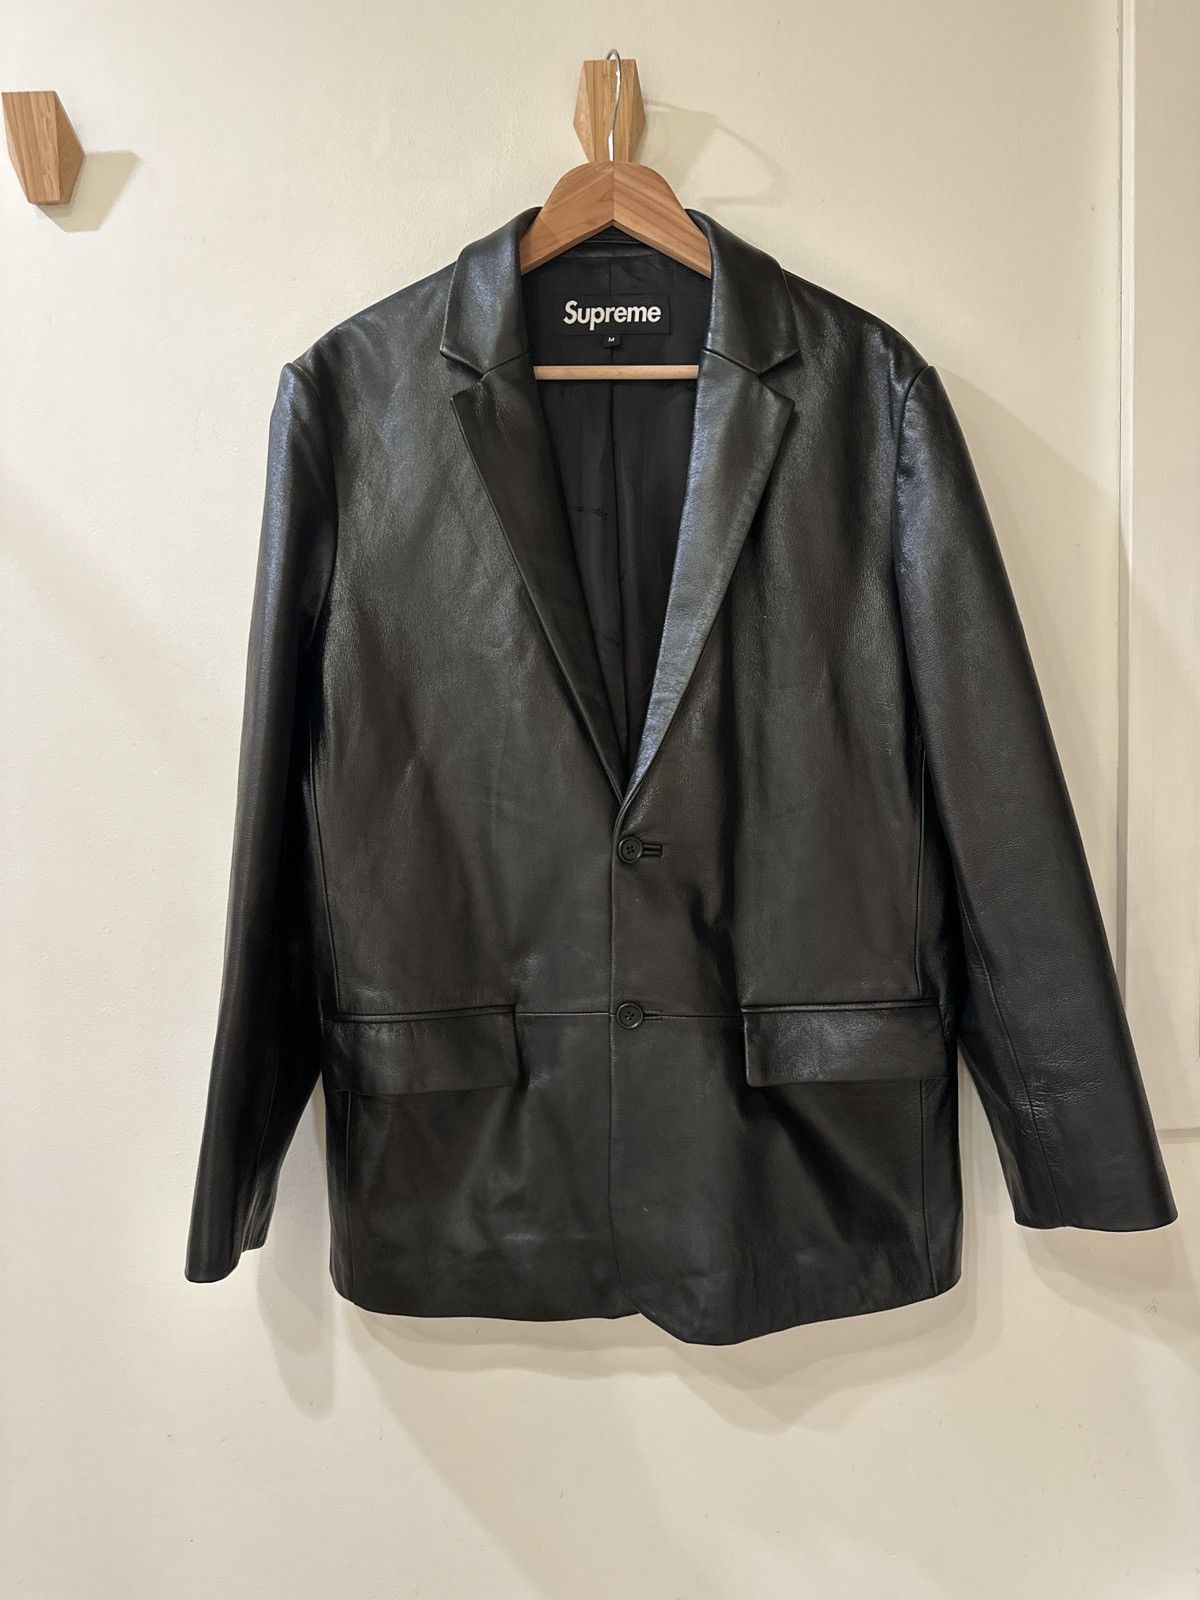 Supreme Leather Blazer | Grailed